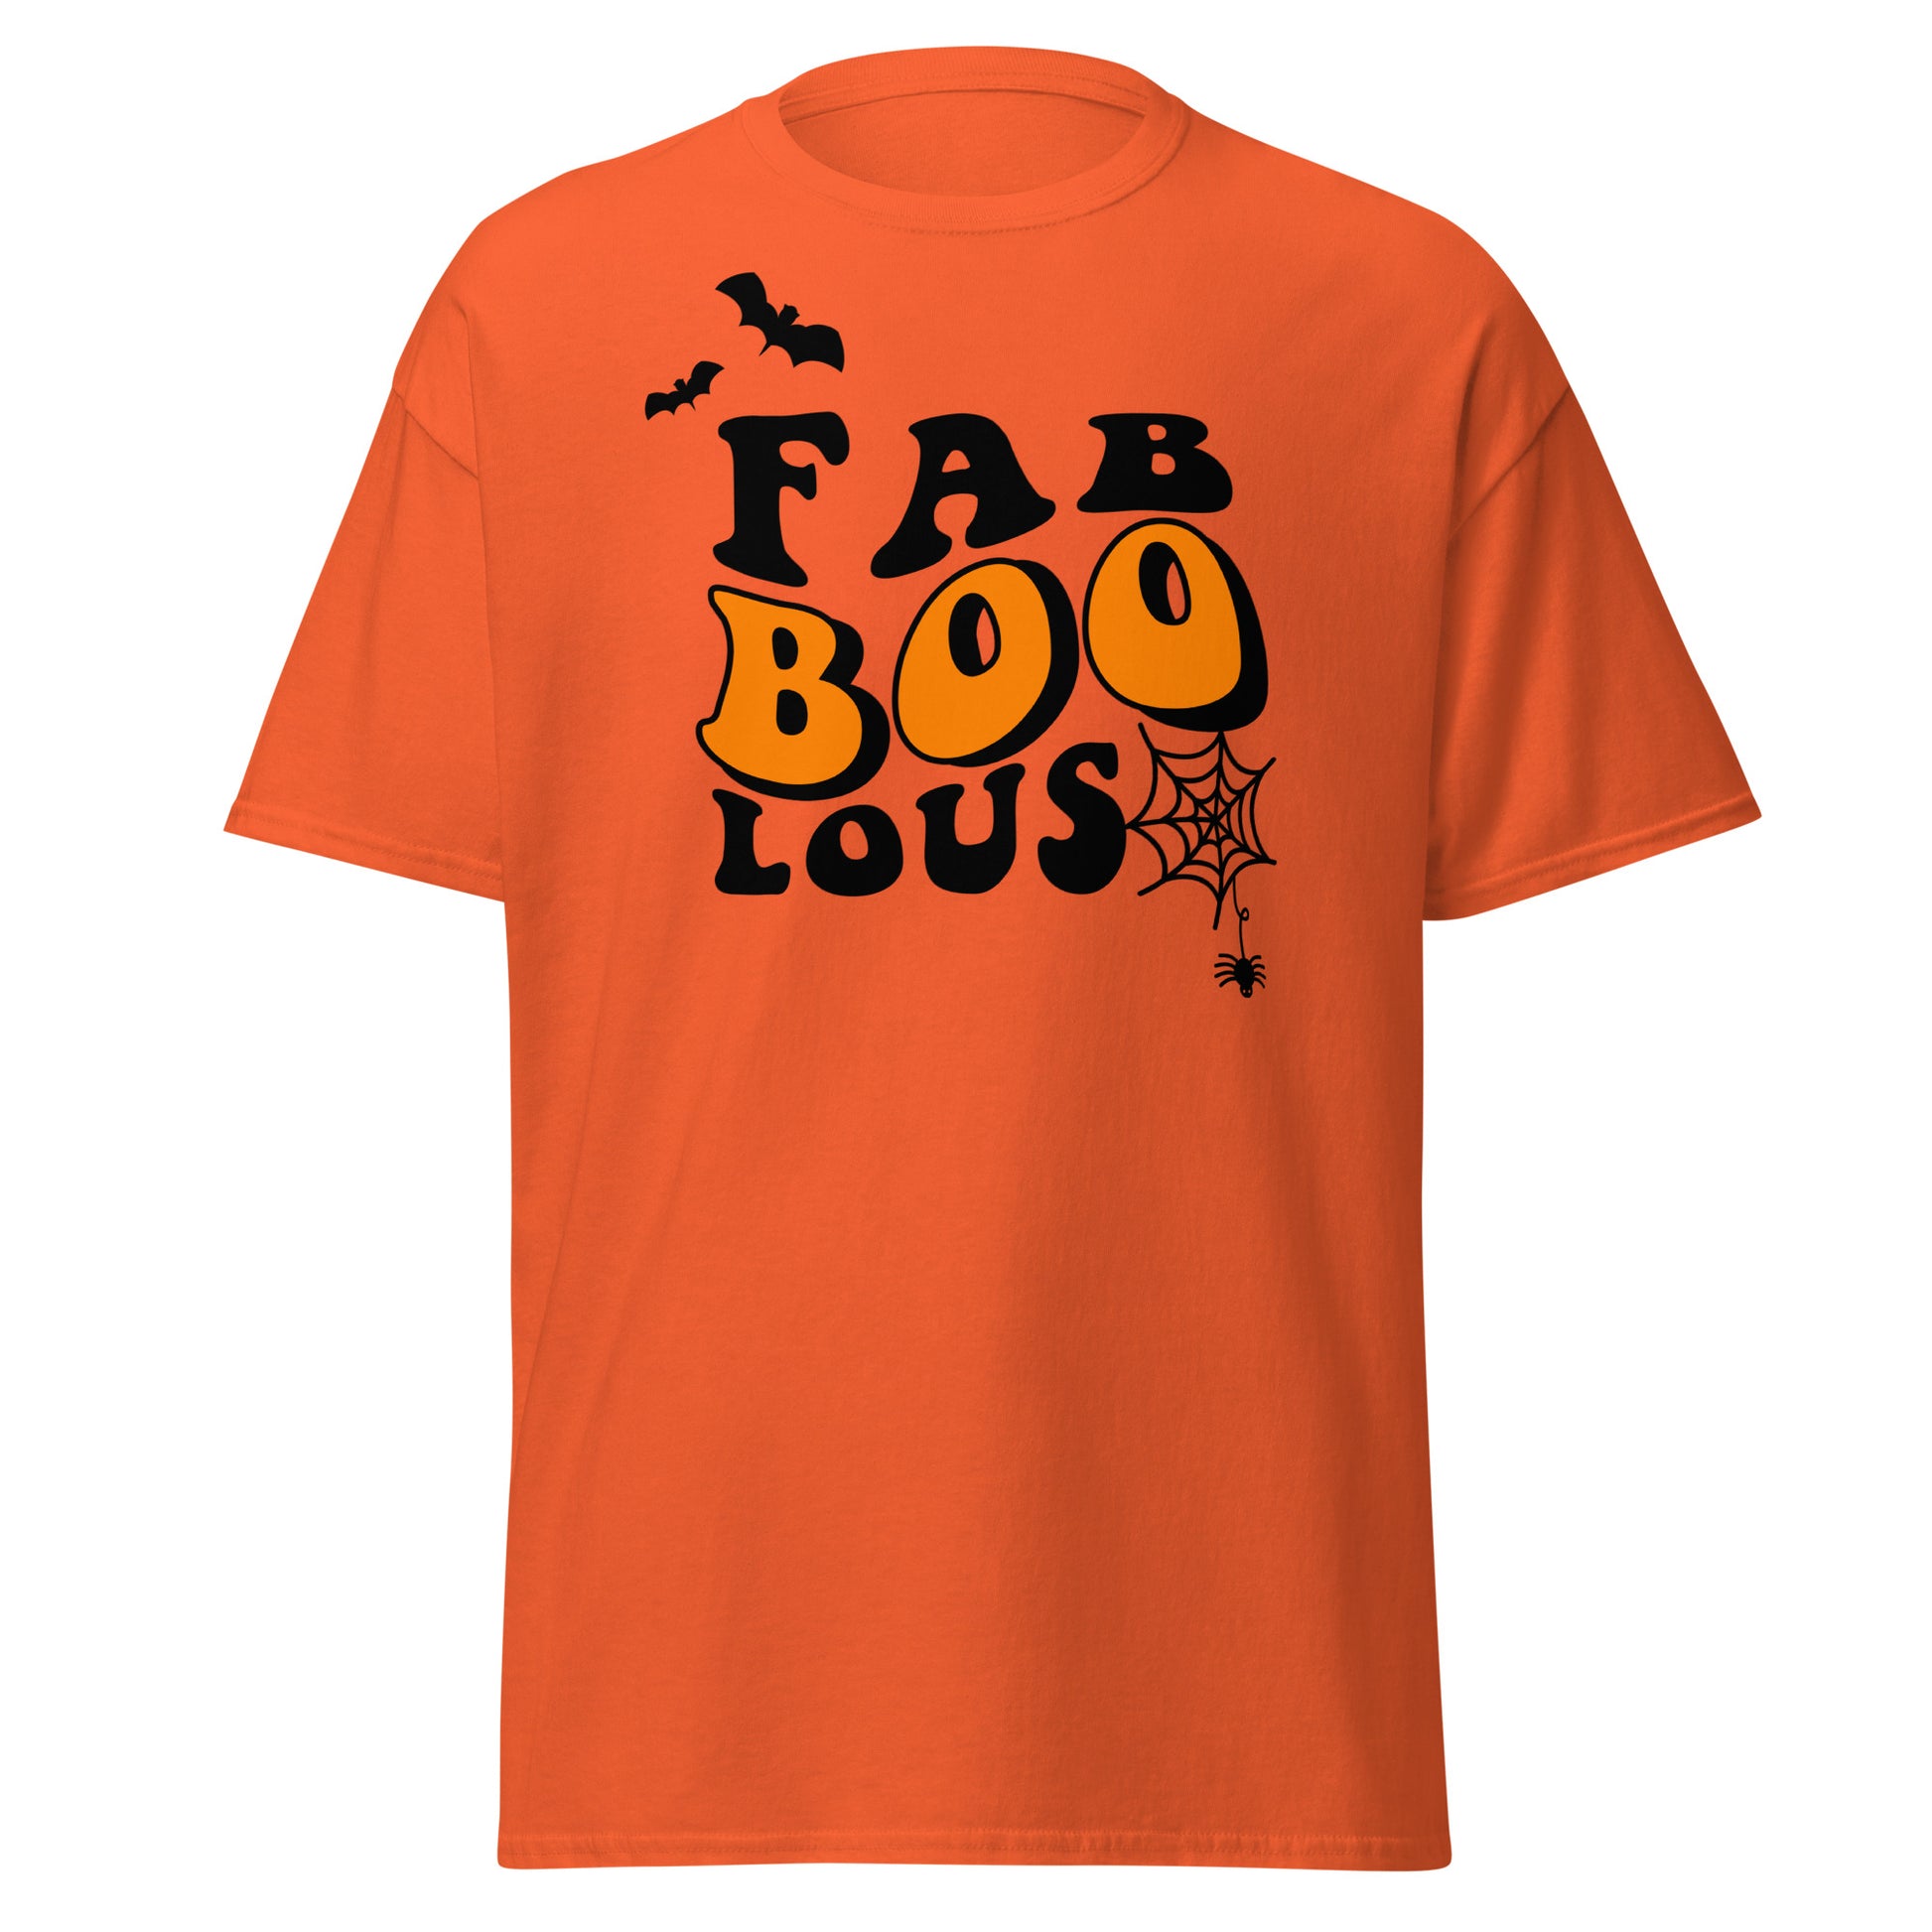 Fab Boo Lous Soft Style Shirt for Divas